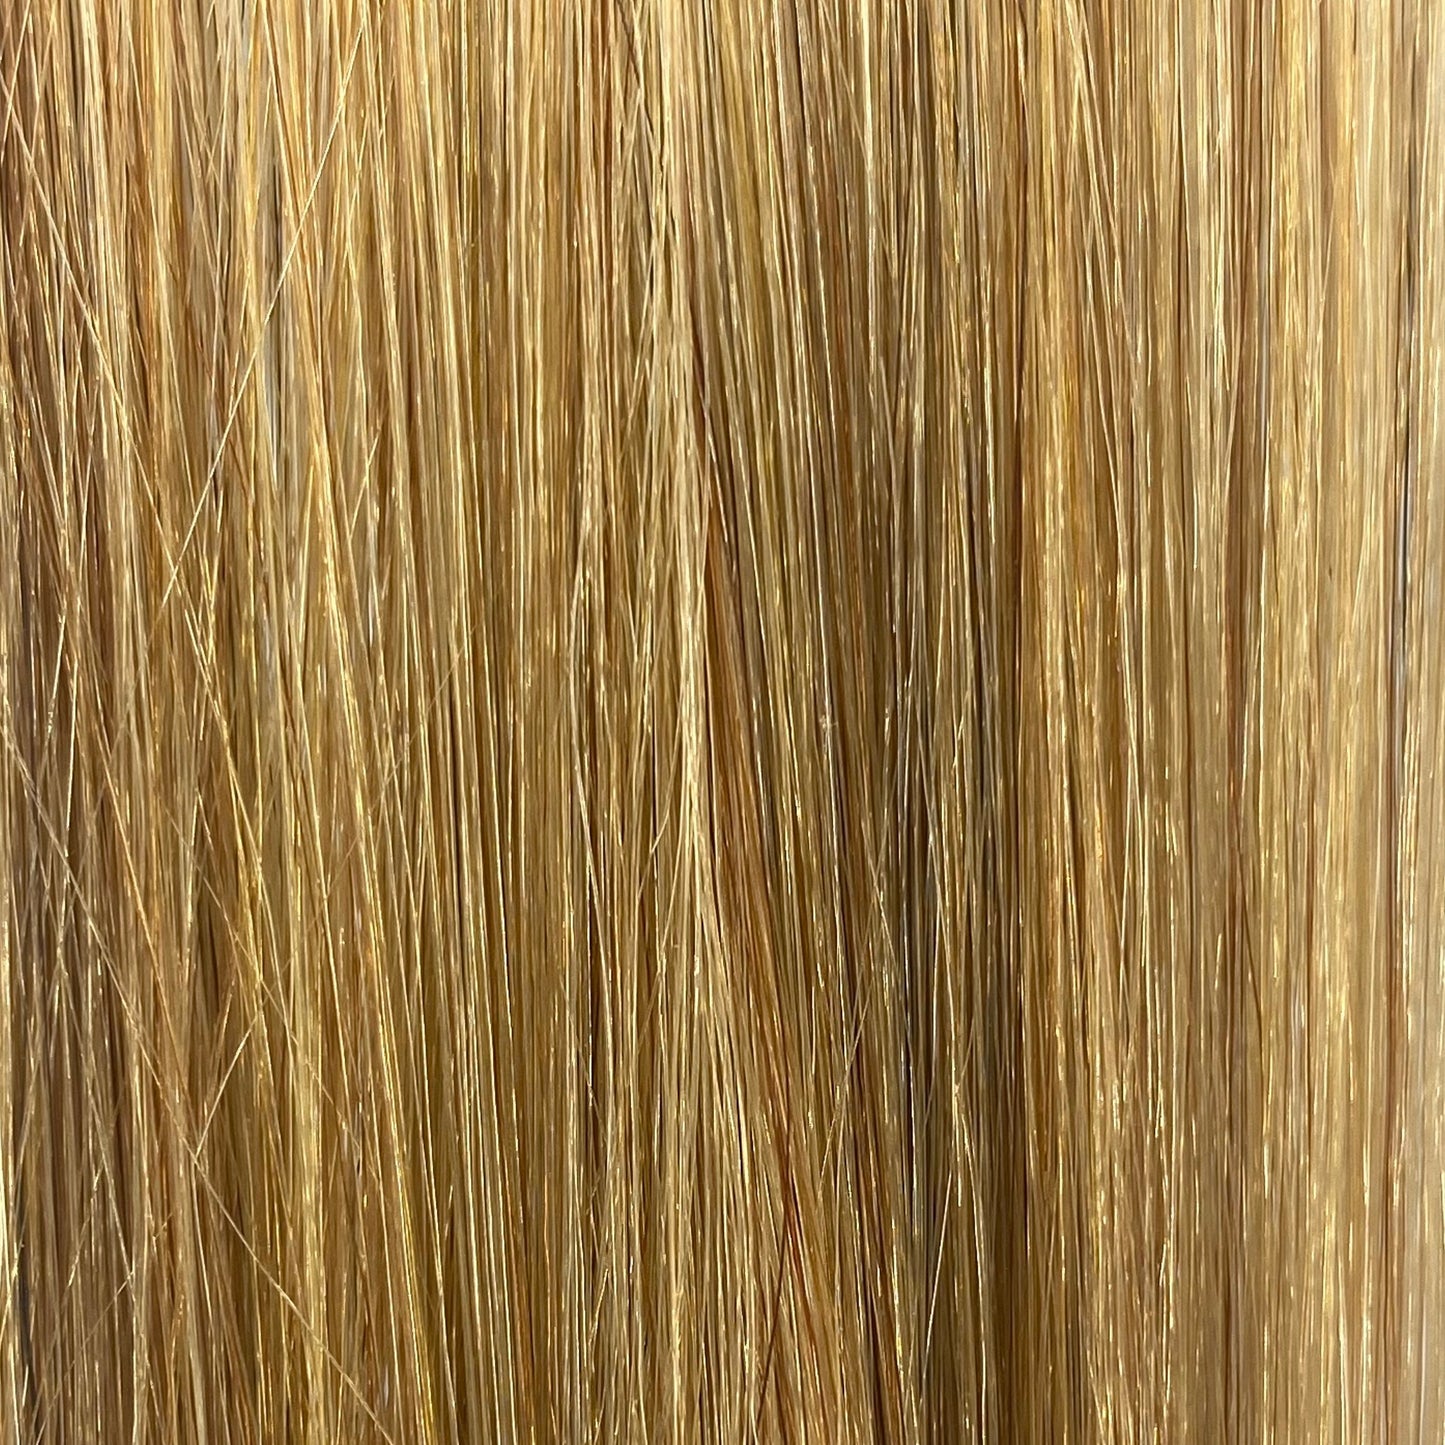 Fusion hair extensions #DB4 - 50cm/20 inches - Dark Golden Blonde Fusion Euro So Cap 